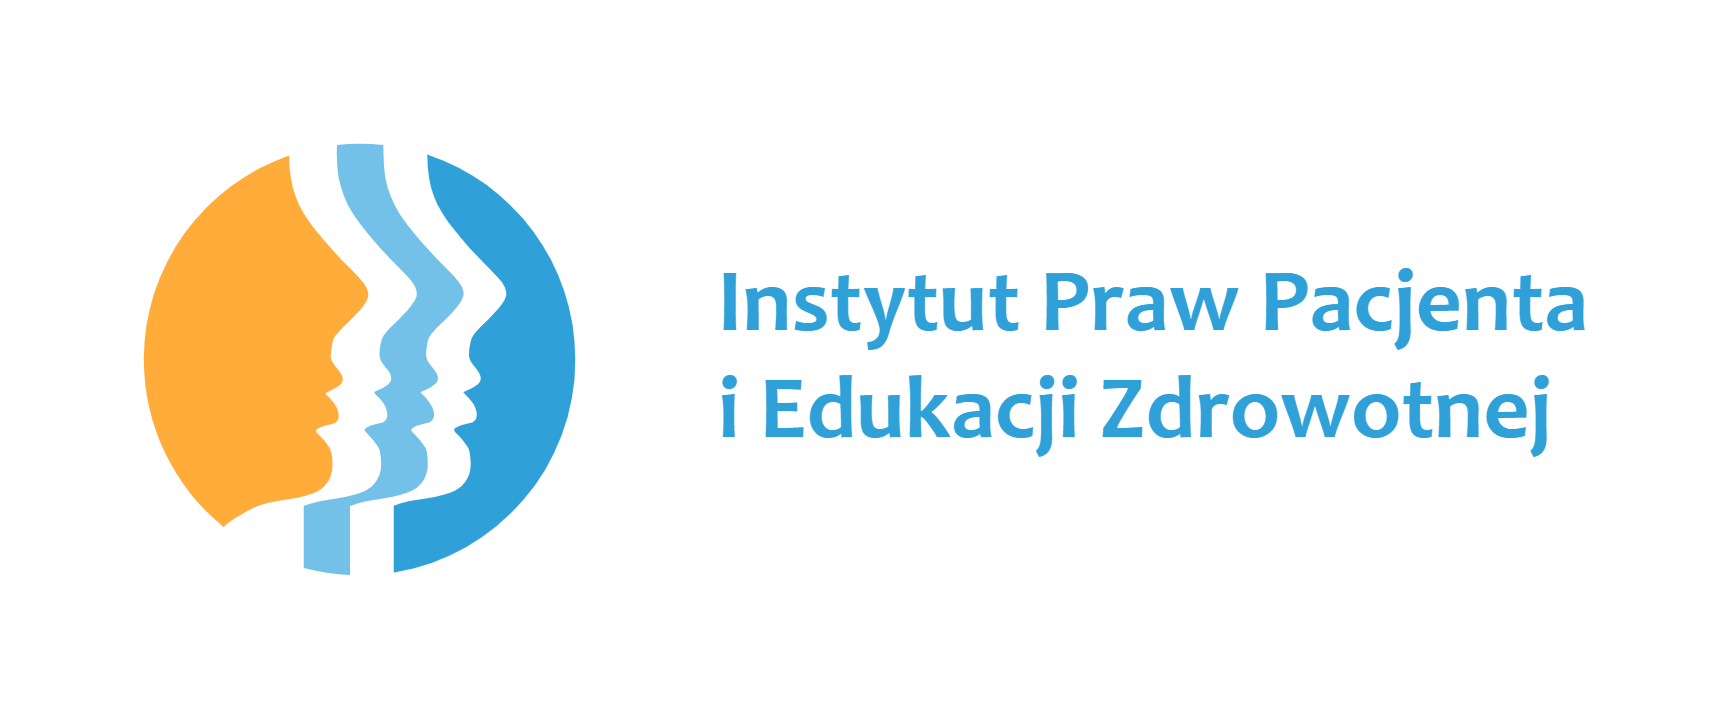 ippez logo 2019_prostokat1